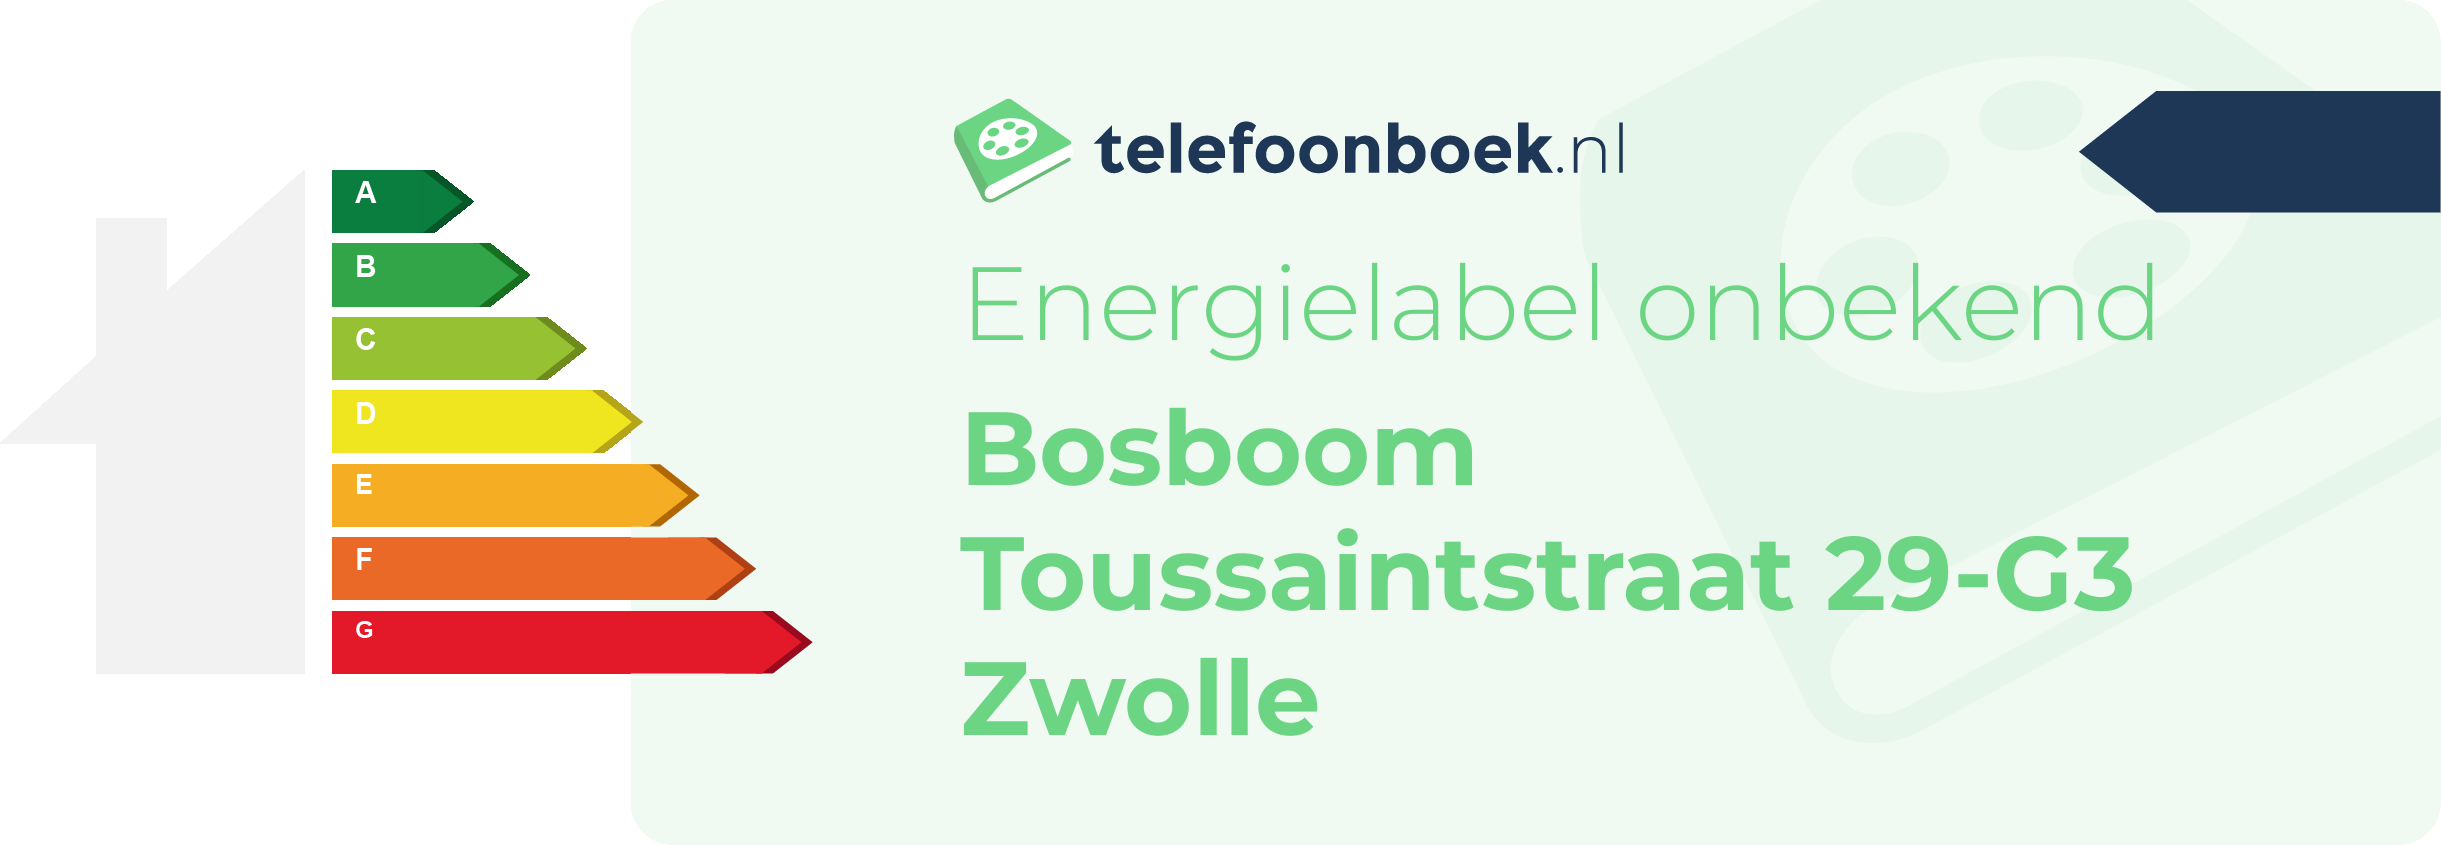 Energielabel Bosboom Toussaintstraat 29-G3 Zwolle